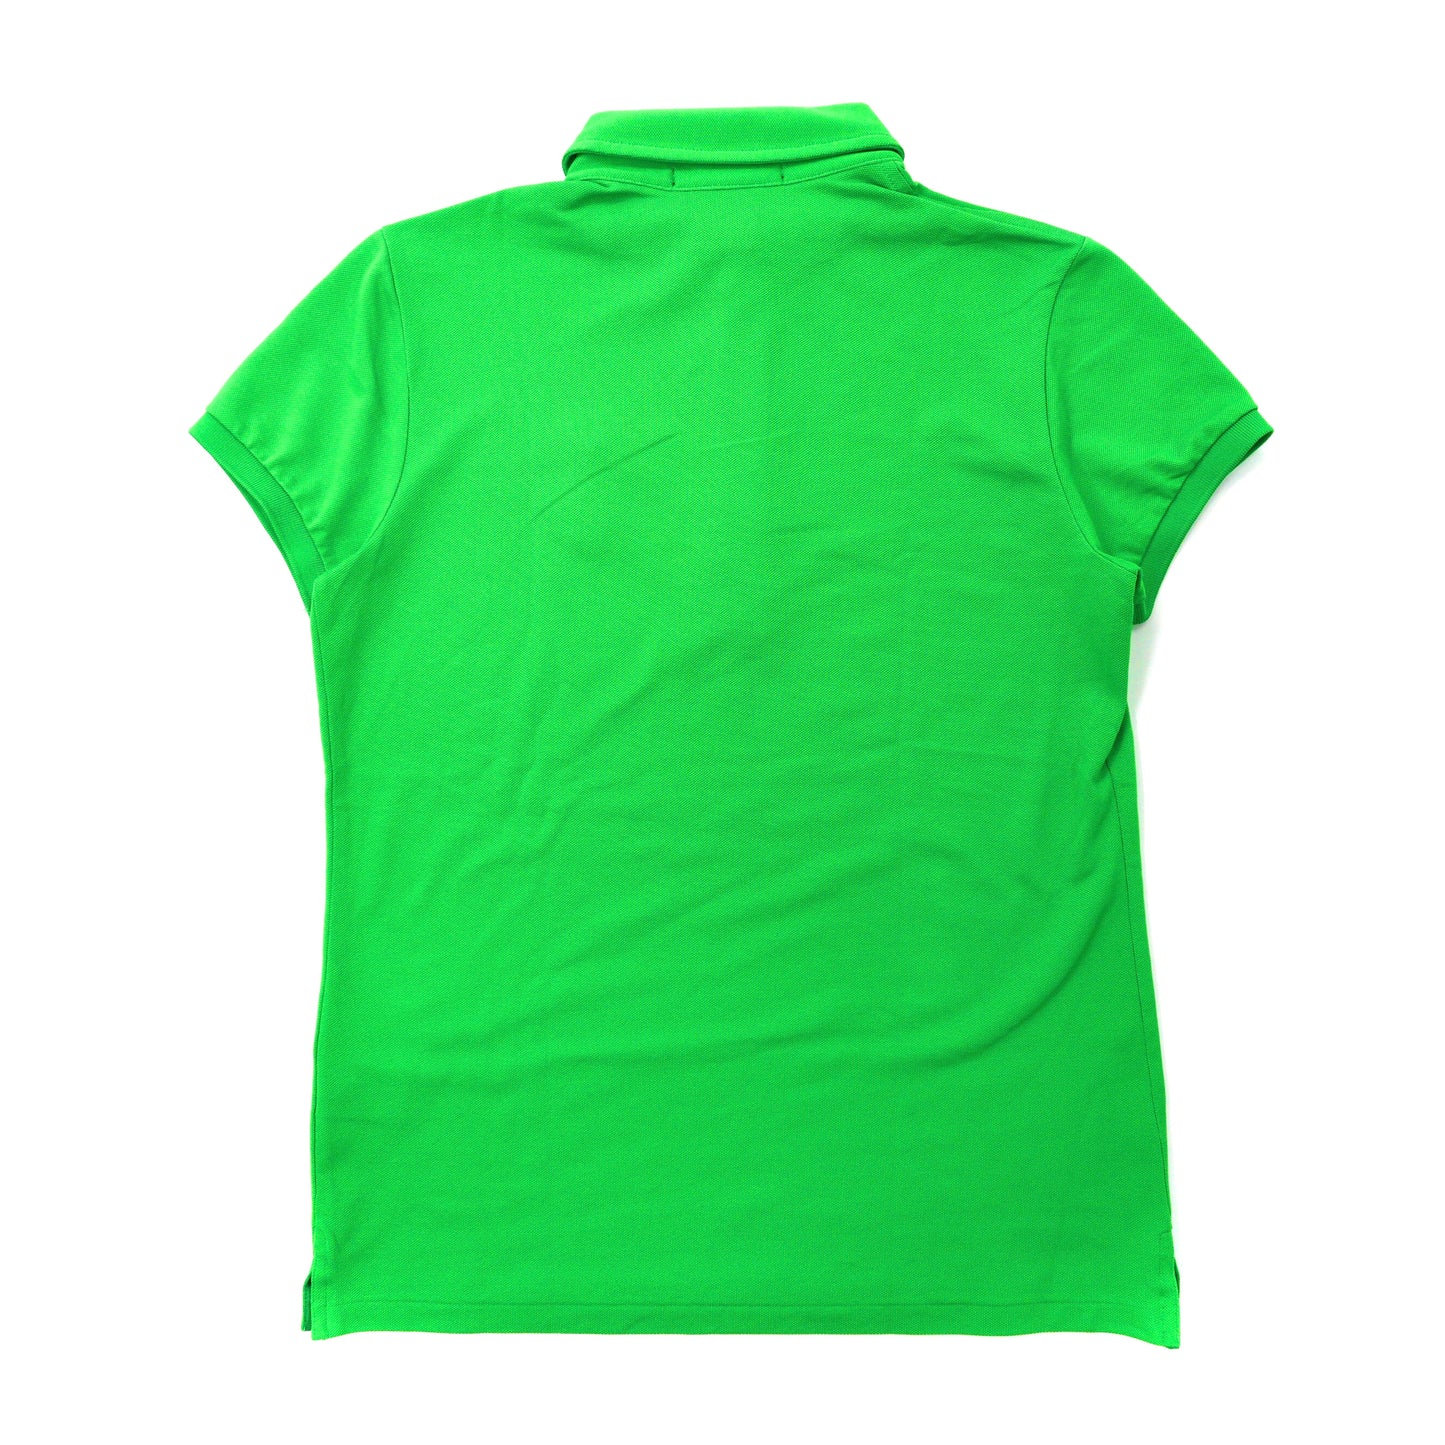 RALPH LAUREN GOLF ポロシャツ S グリーン コットン ビッグポニー刺繍 ペルー製